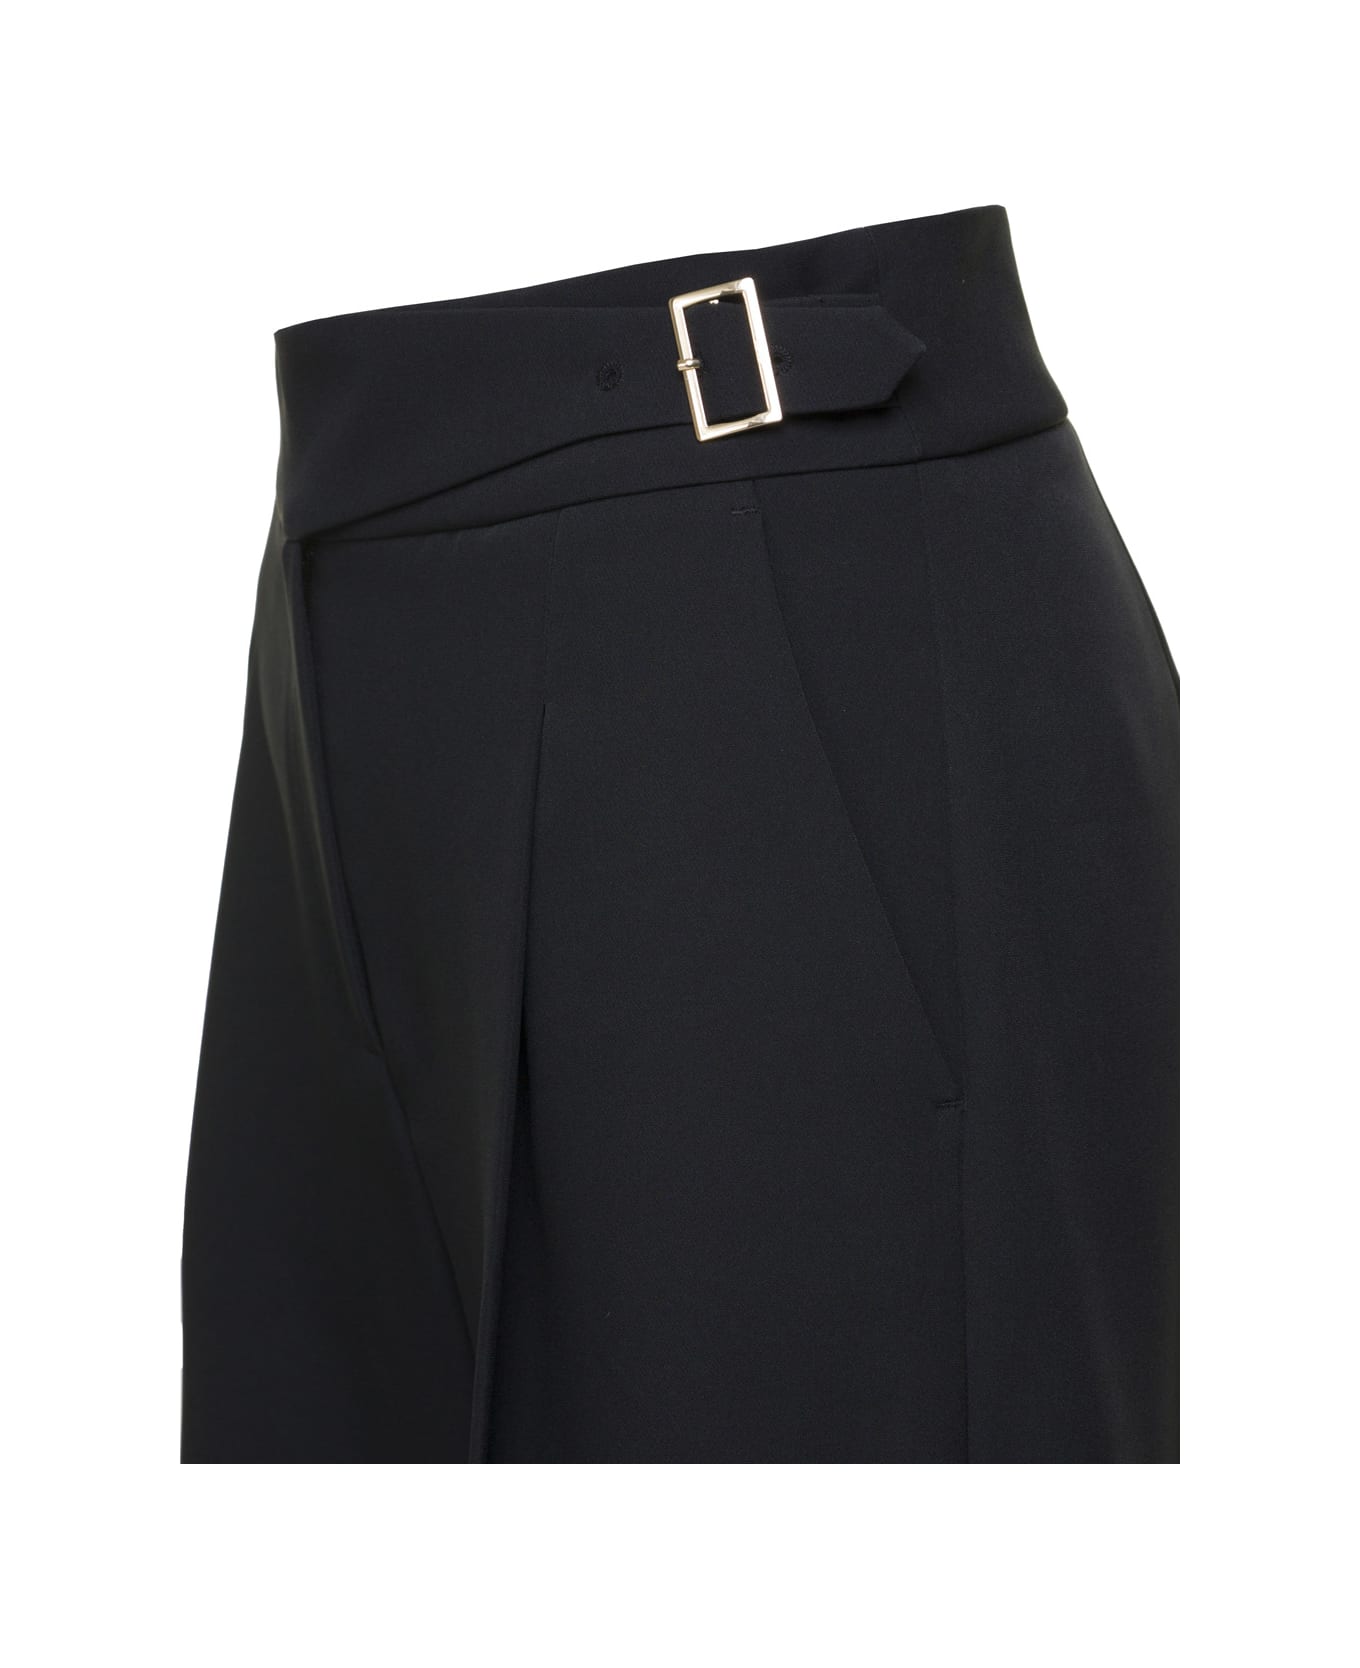 Liu-Jo Black Palazzo Pants With Darts In Stretch Technical Fabric Woman - Black ボトムス